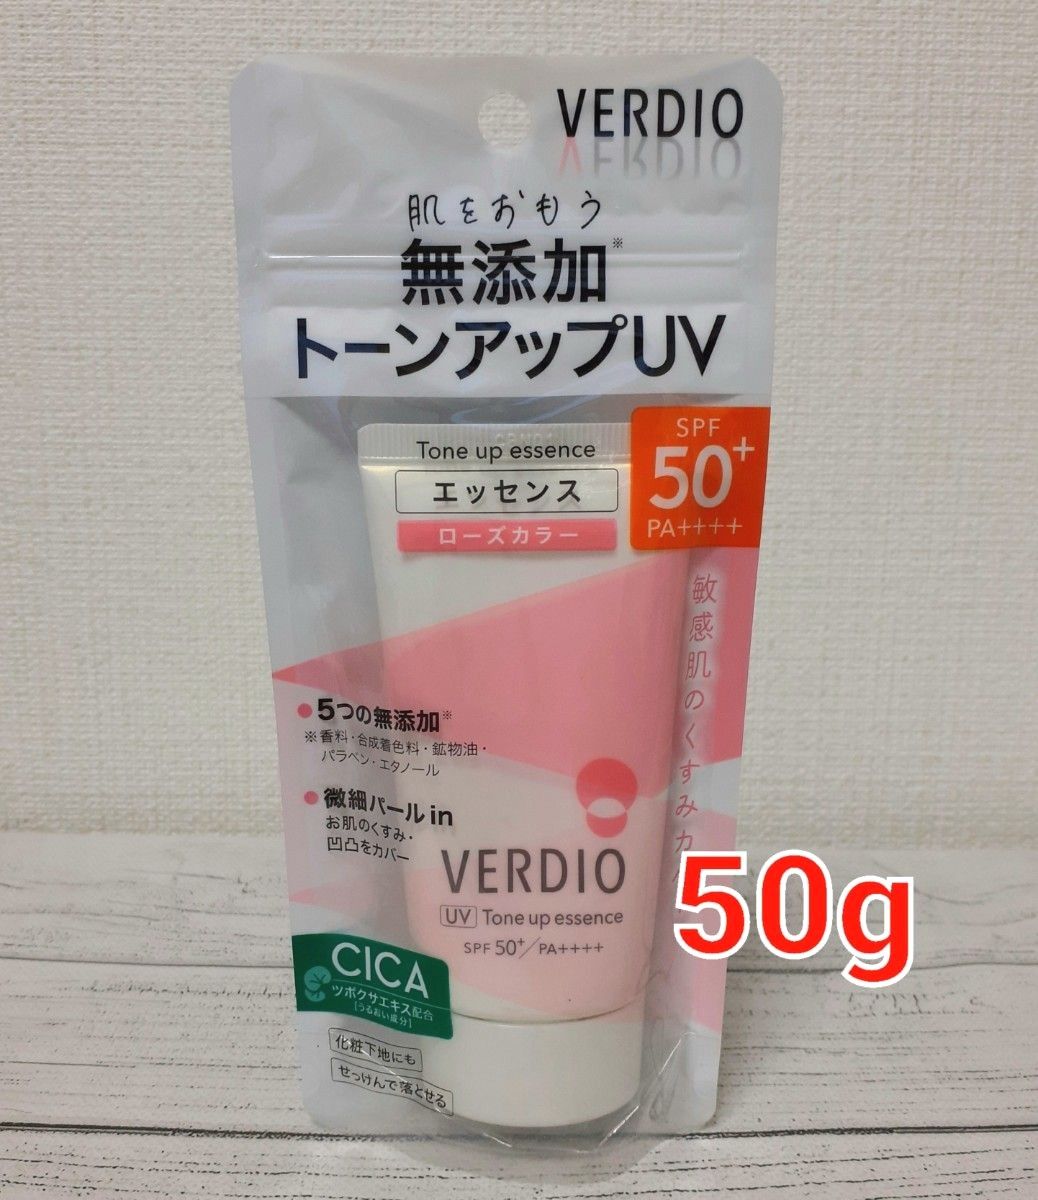 VERDIO ベルディオ 無添加 UVトーンアップエッセンス 日焼け止めクリーム SPF50 50g